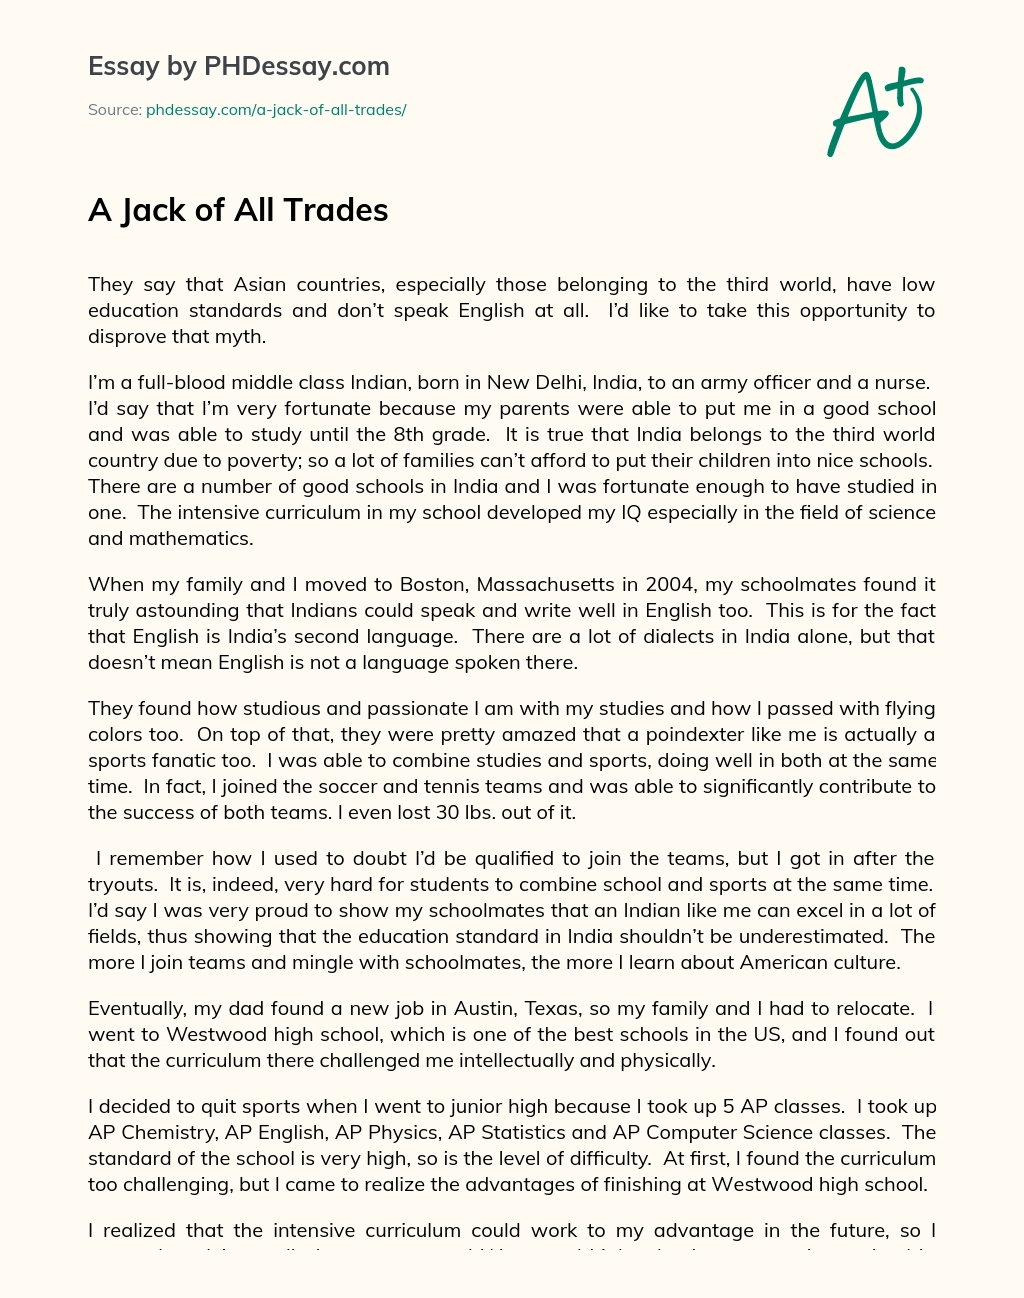 A Jack of All Trades essay